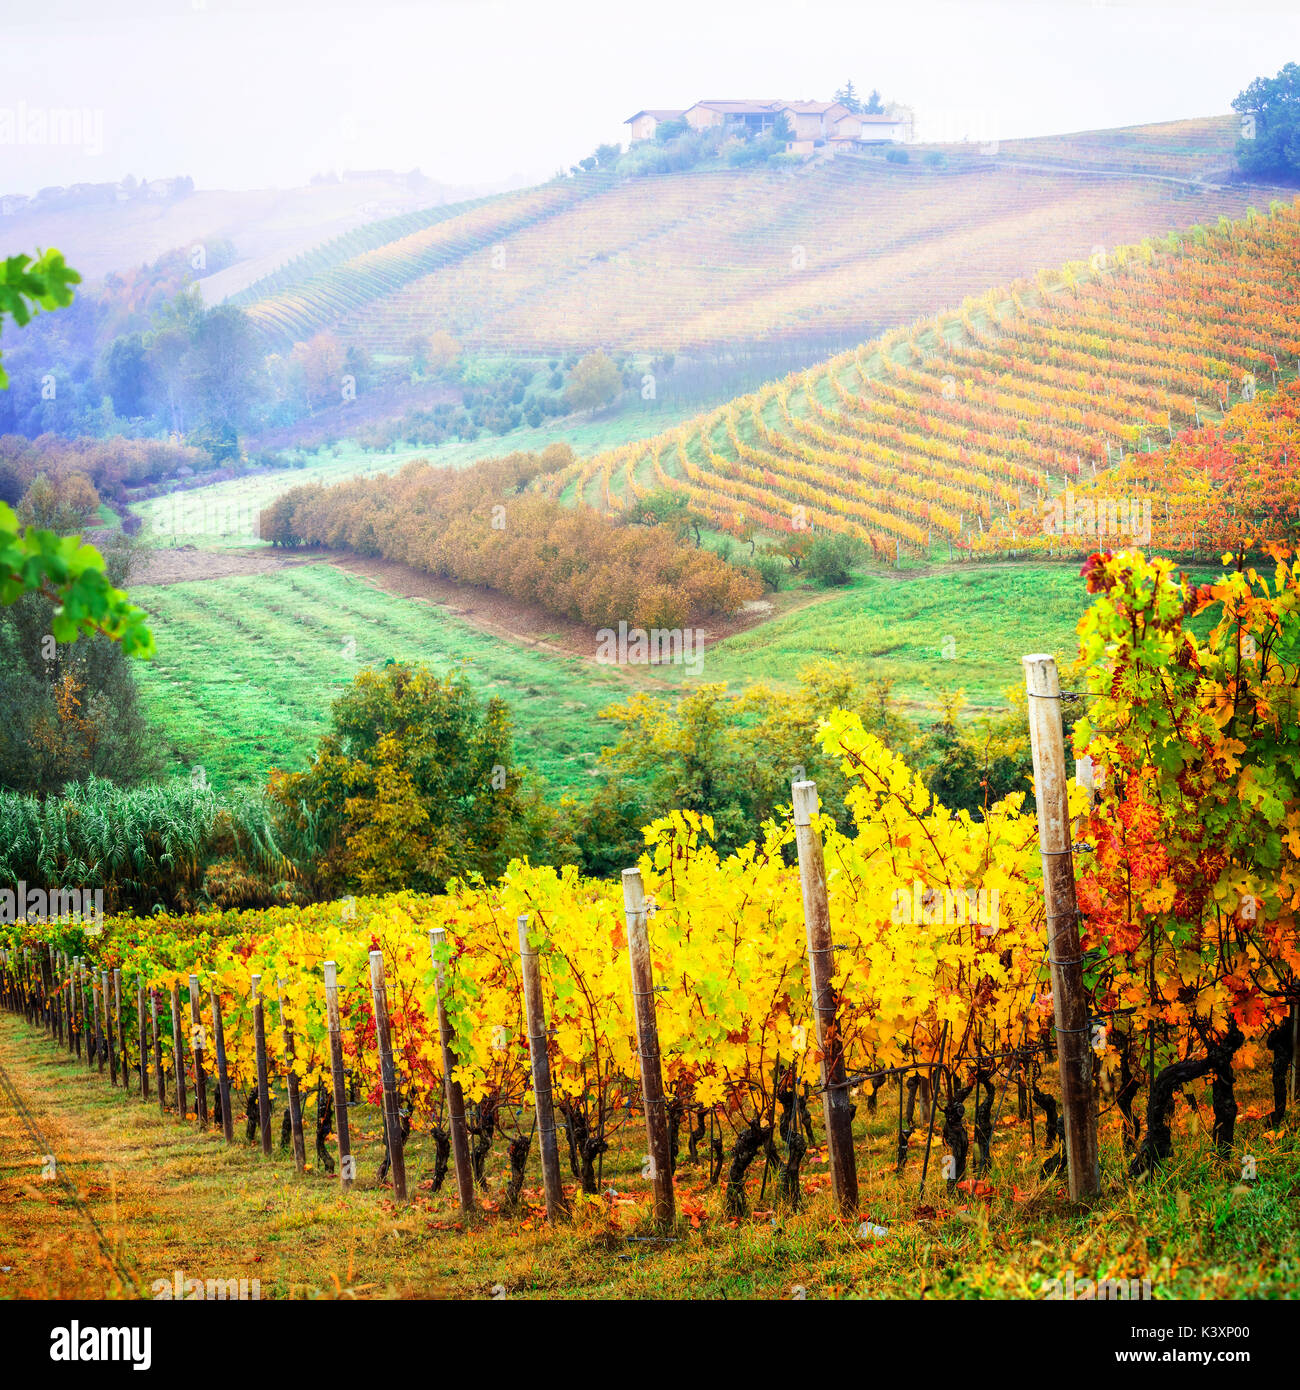 Impressive multicolored vineyards in Piemonte,Italy. Stock Photo